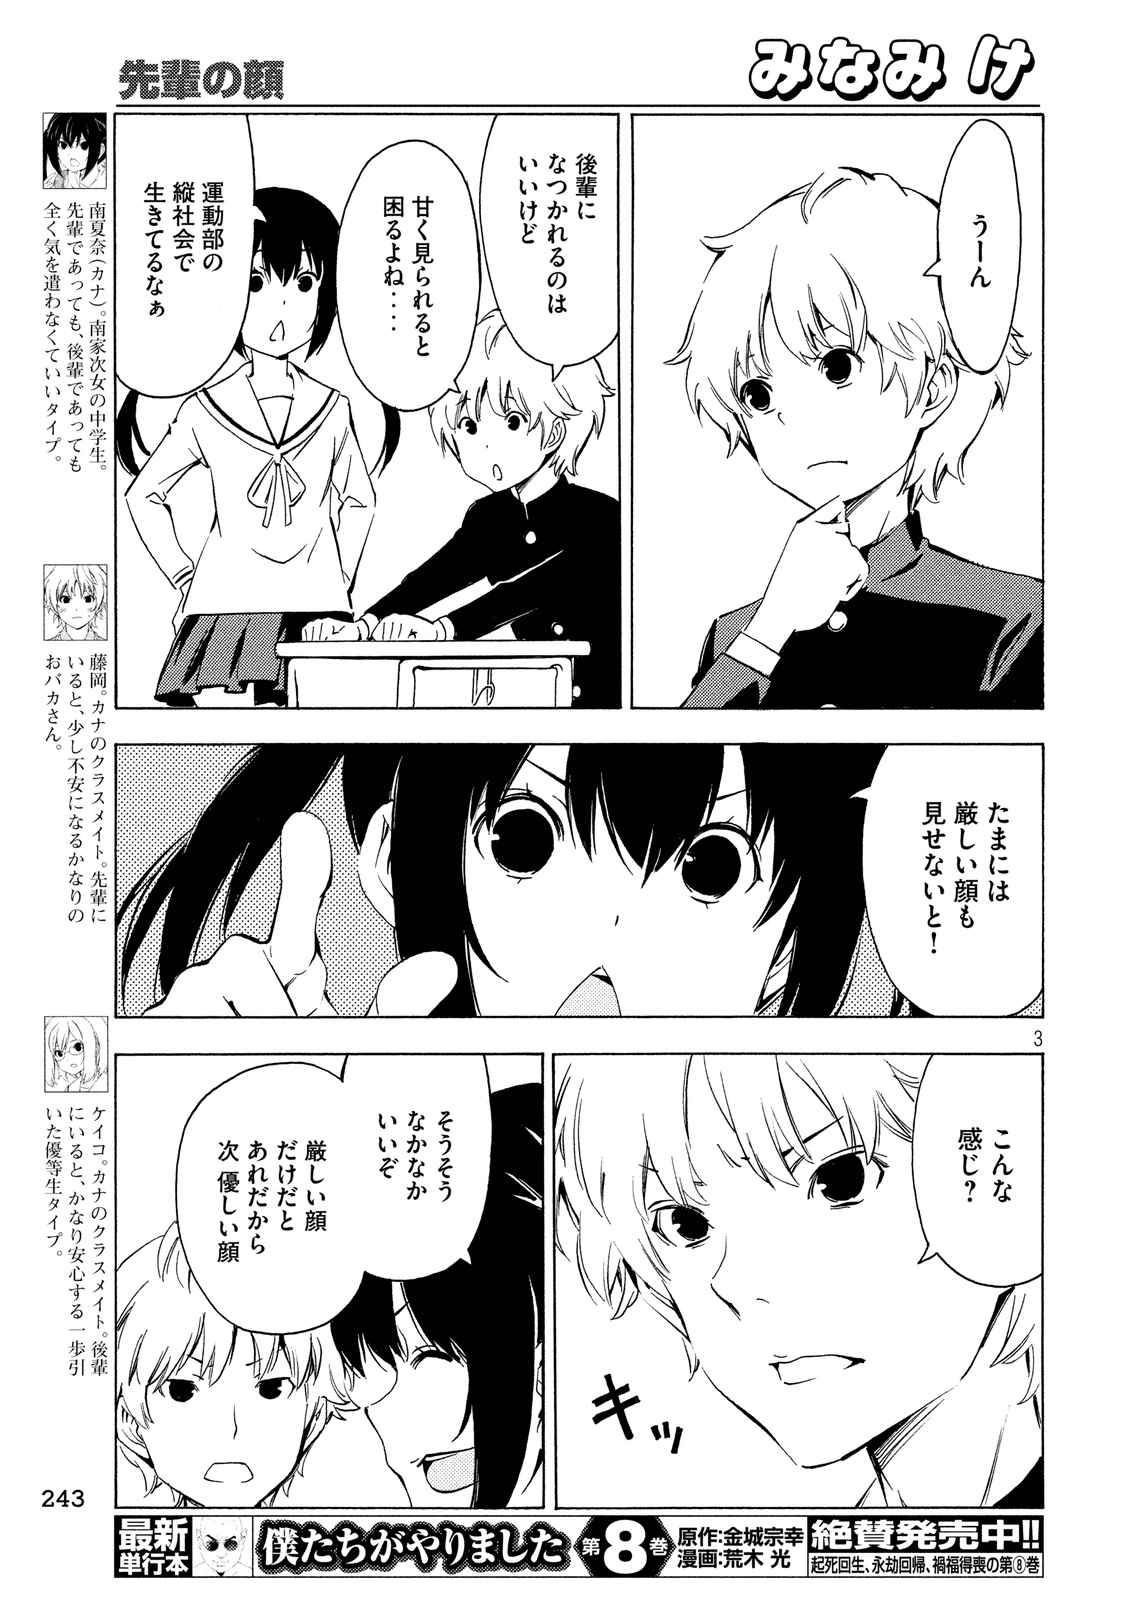 Minami-ke - Chapter 313 - Page 3